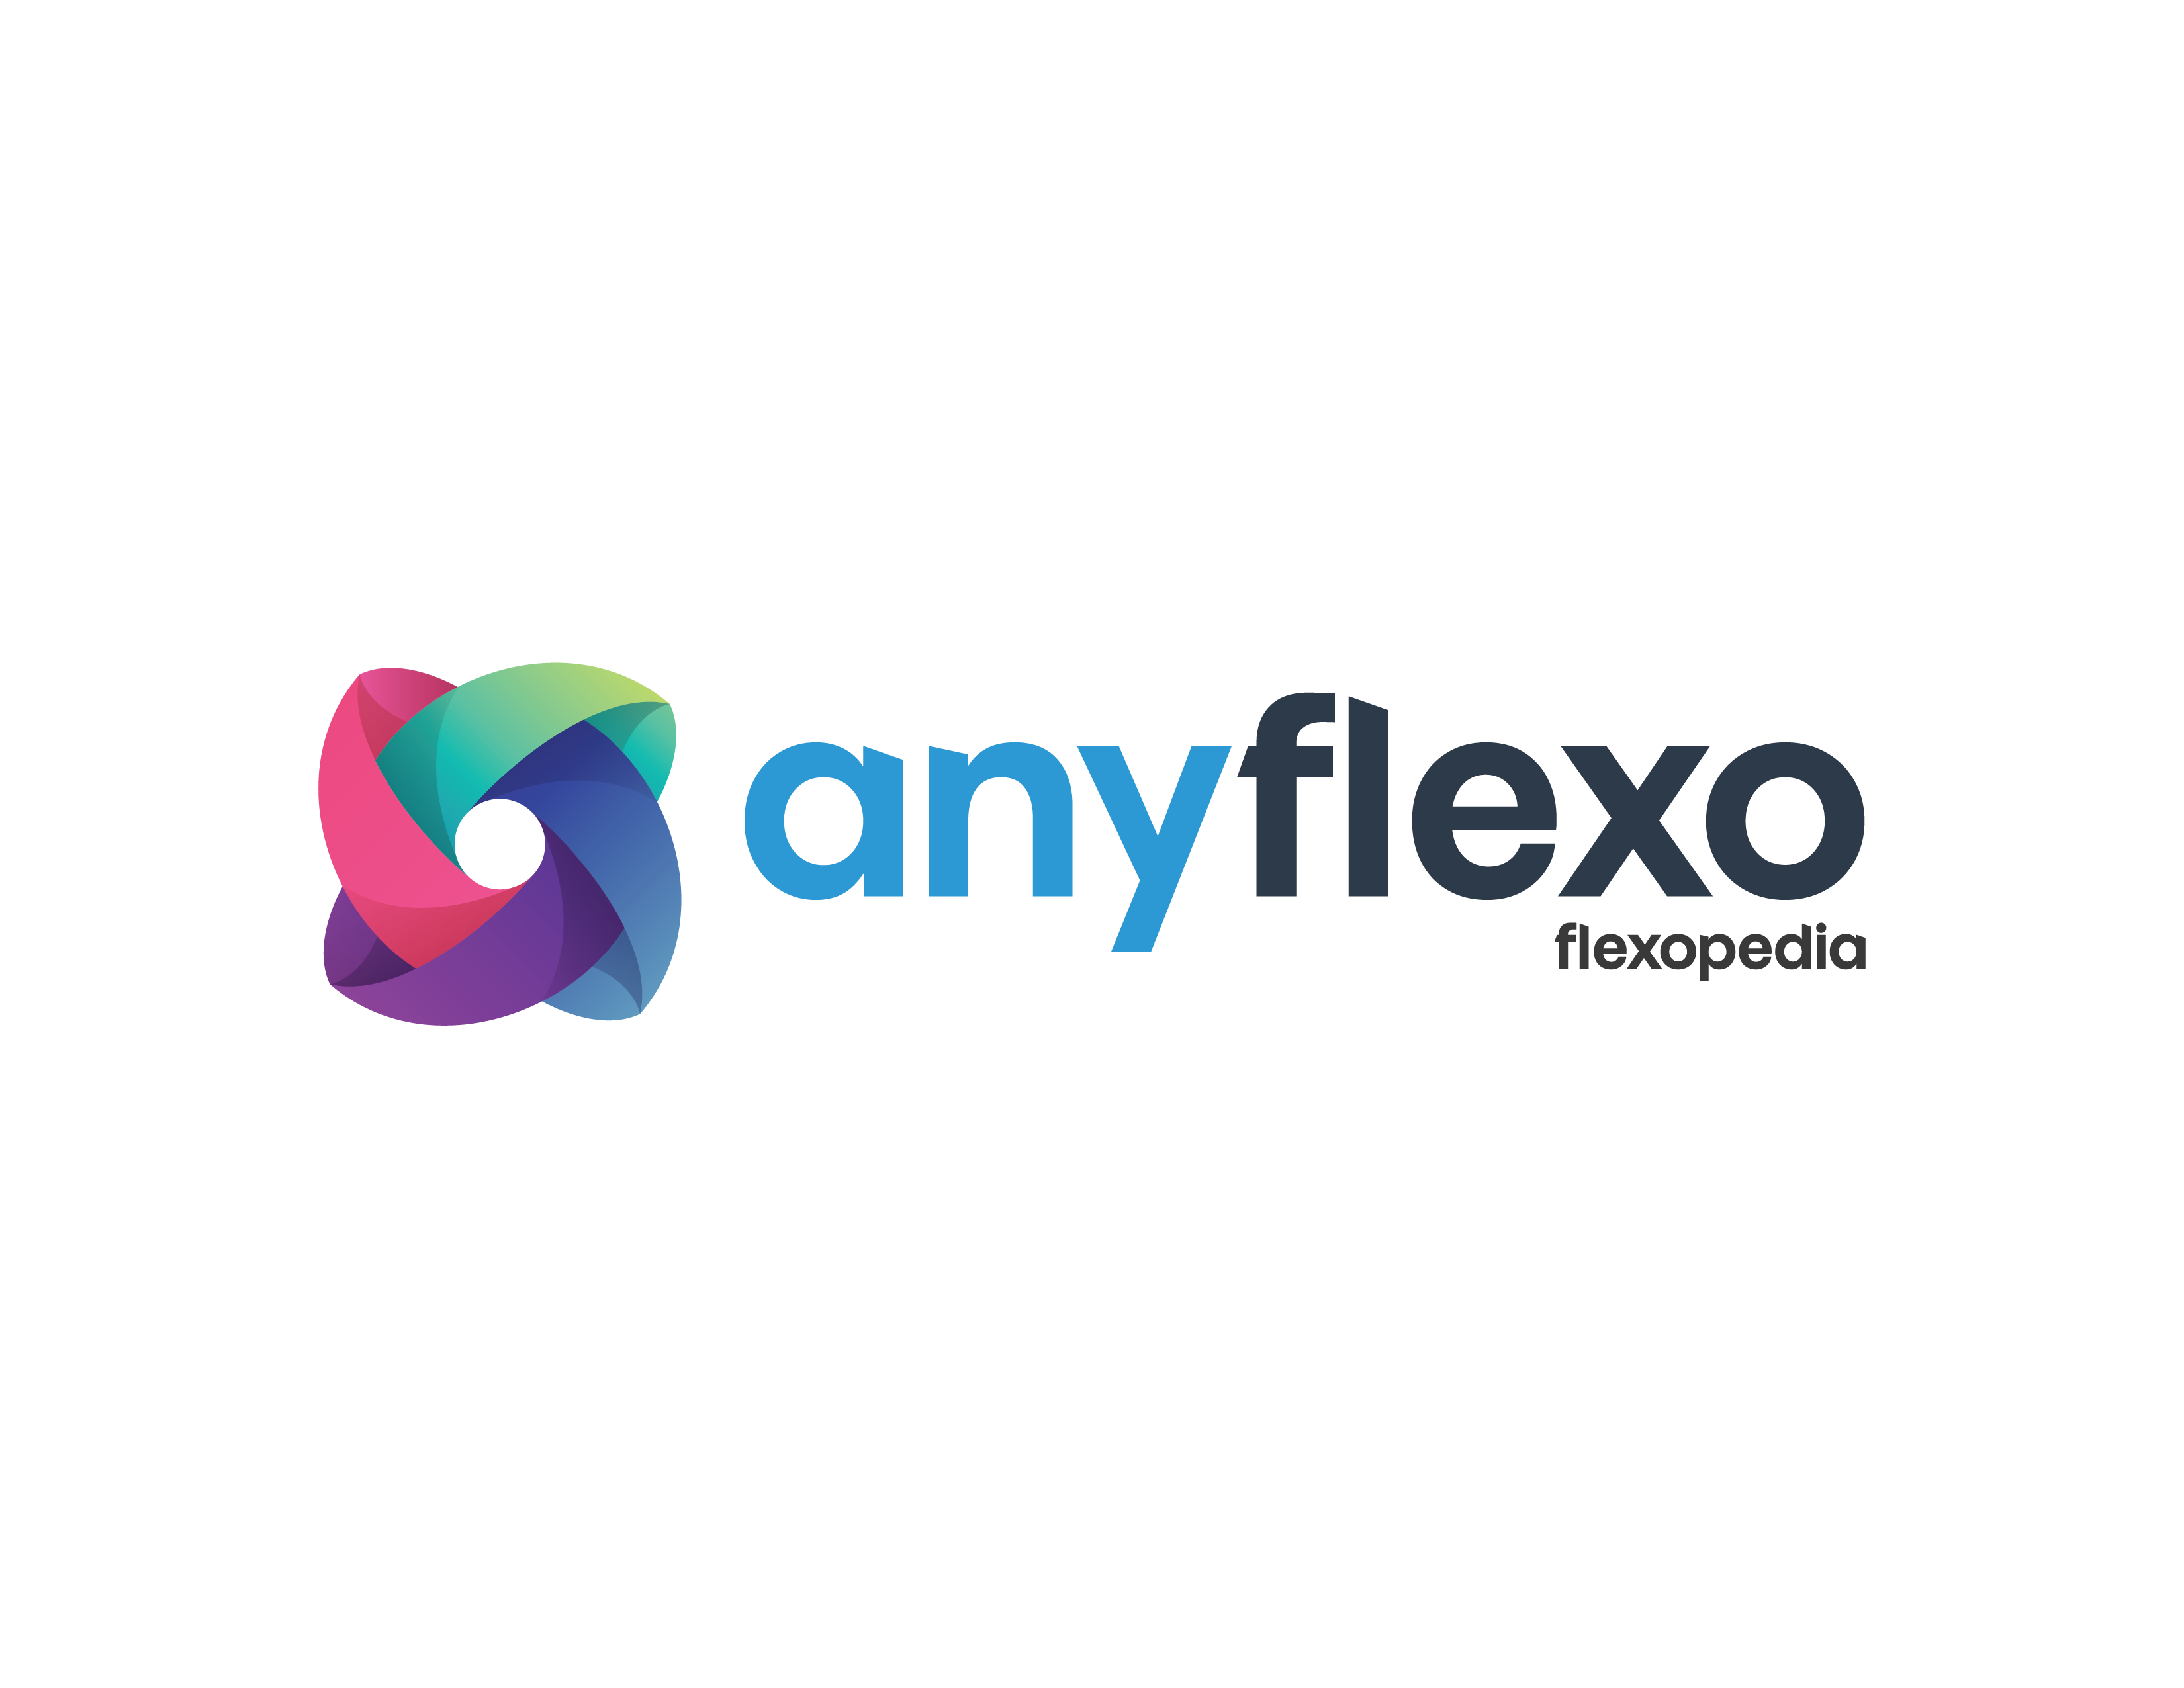 Anyflexo Flexopedia knowledge for flexographic printing